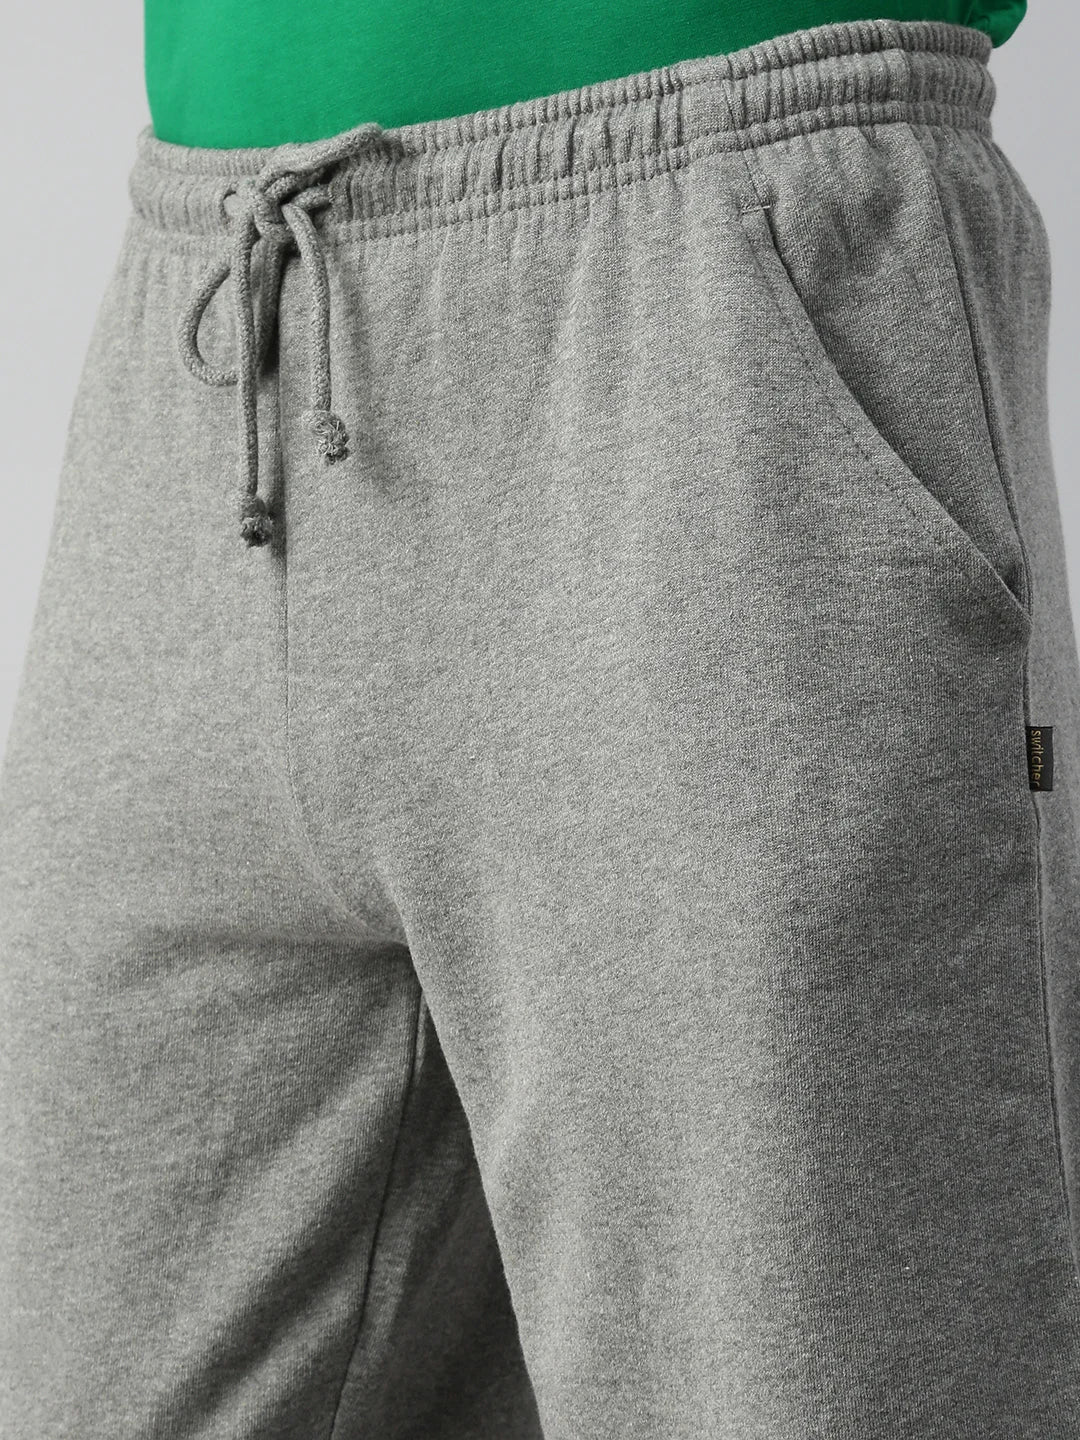 herren-vico-baumwolle-polyester-track-pants-noir-front